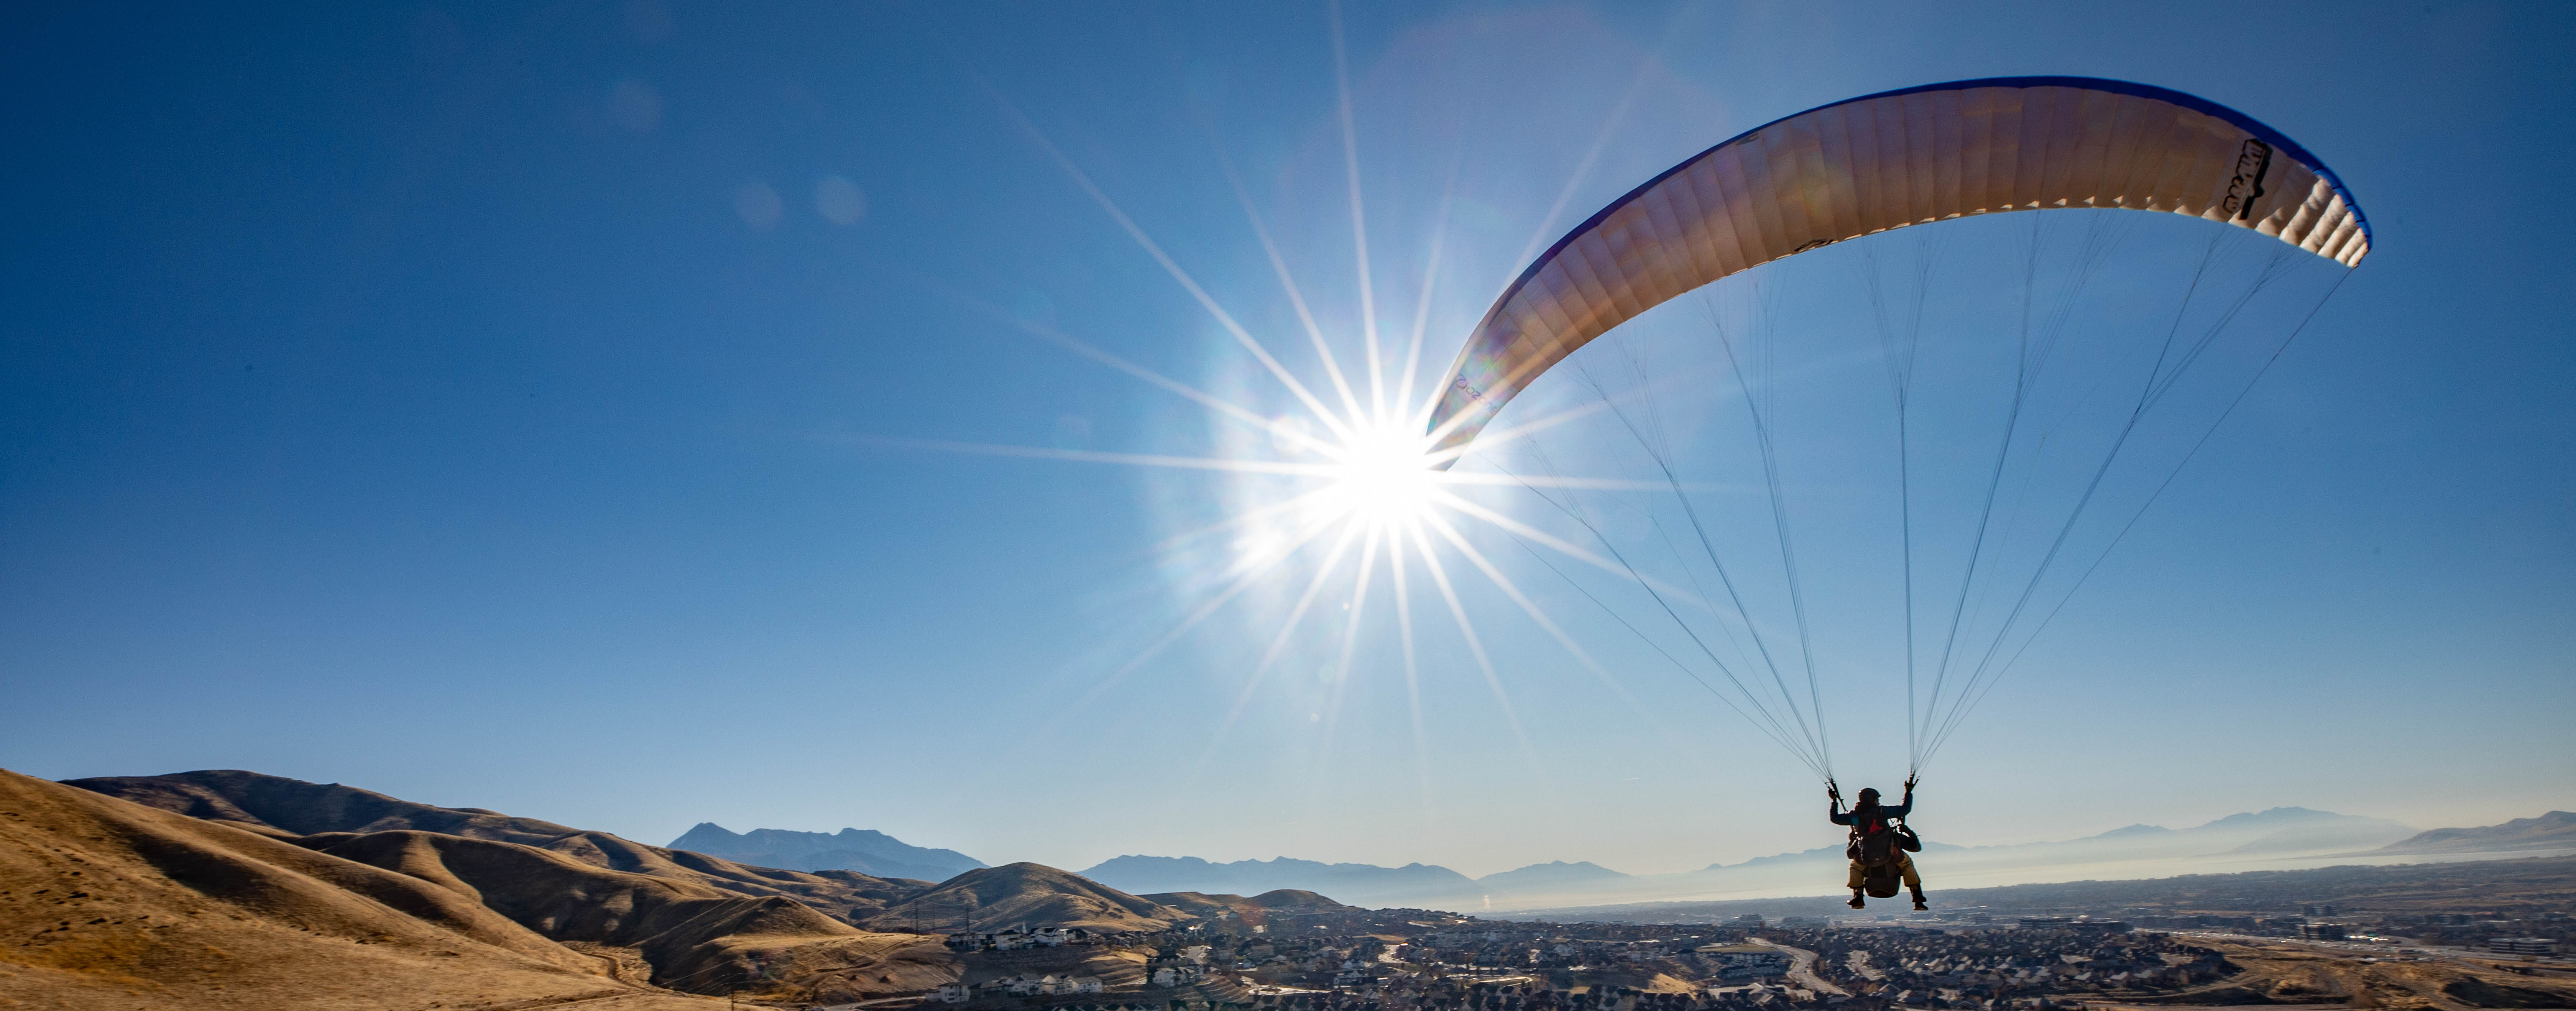 moab-sun-parachute